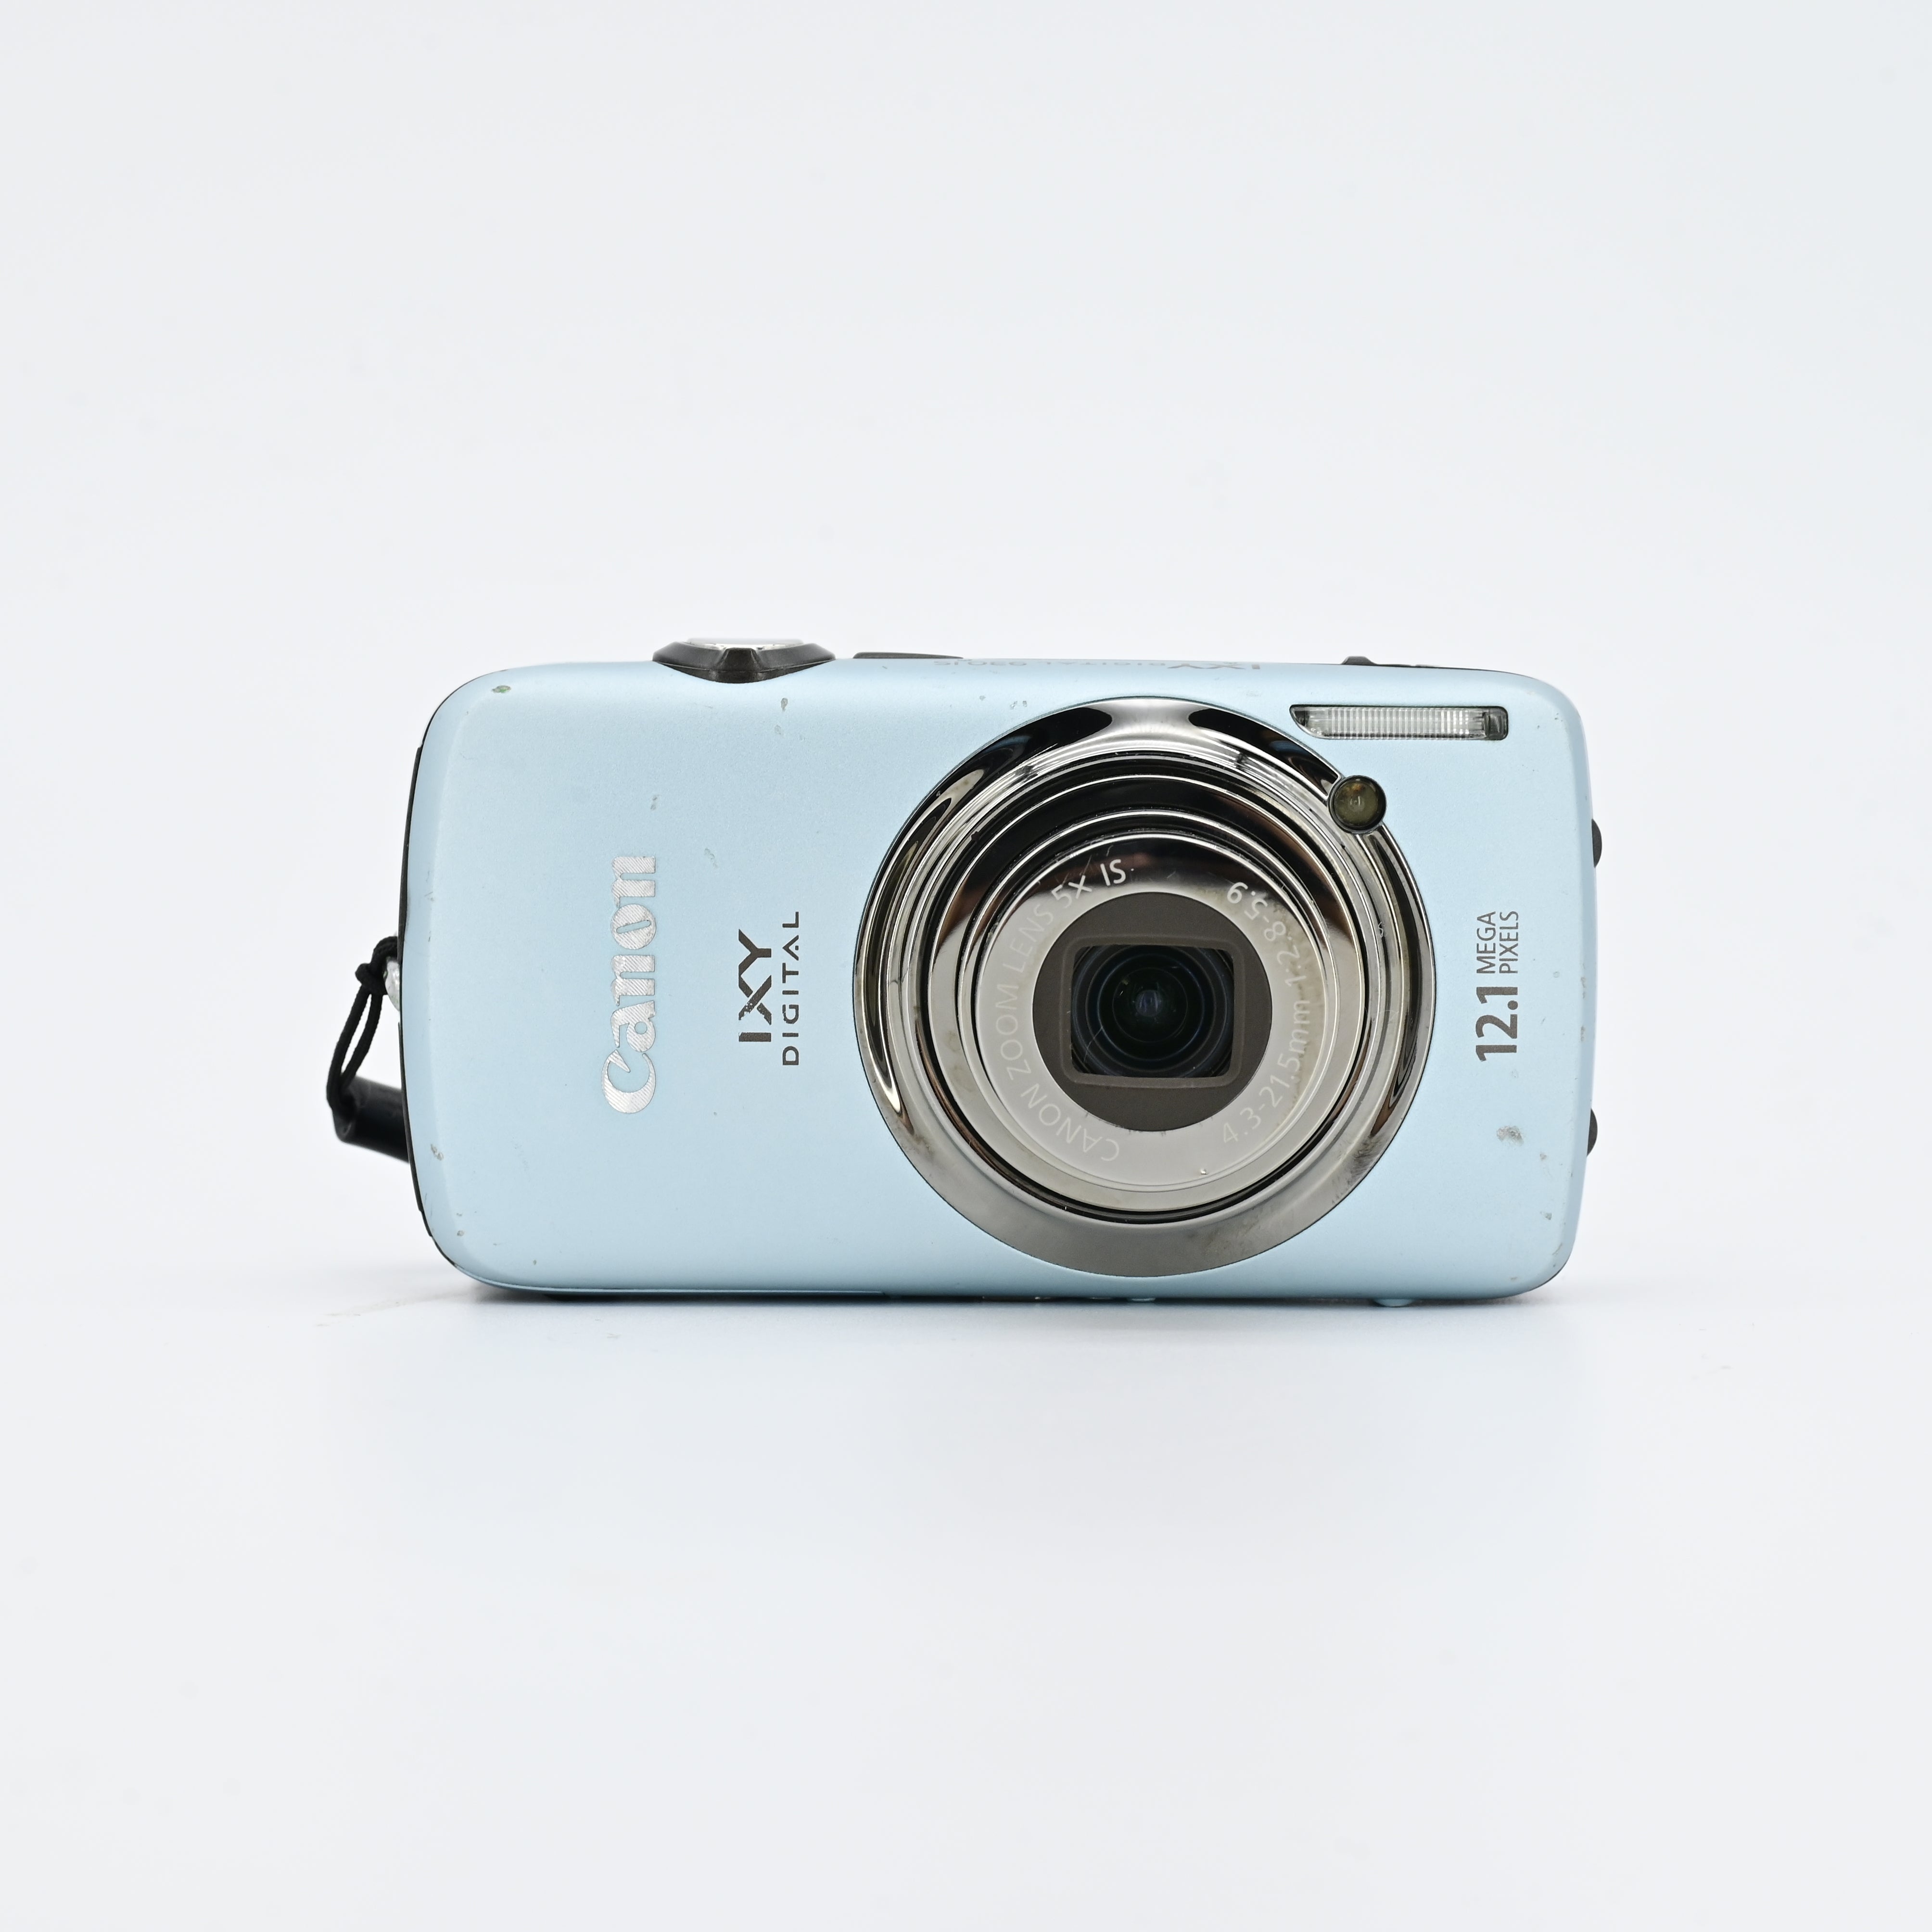 Canon IXY 930 IS - デジタルカメラ